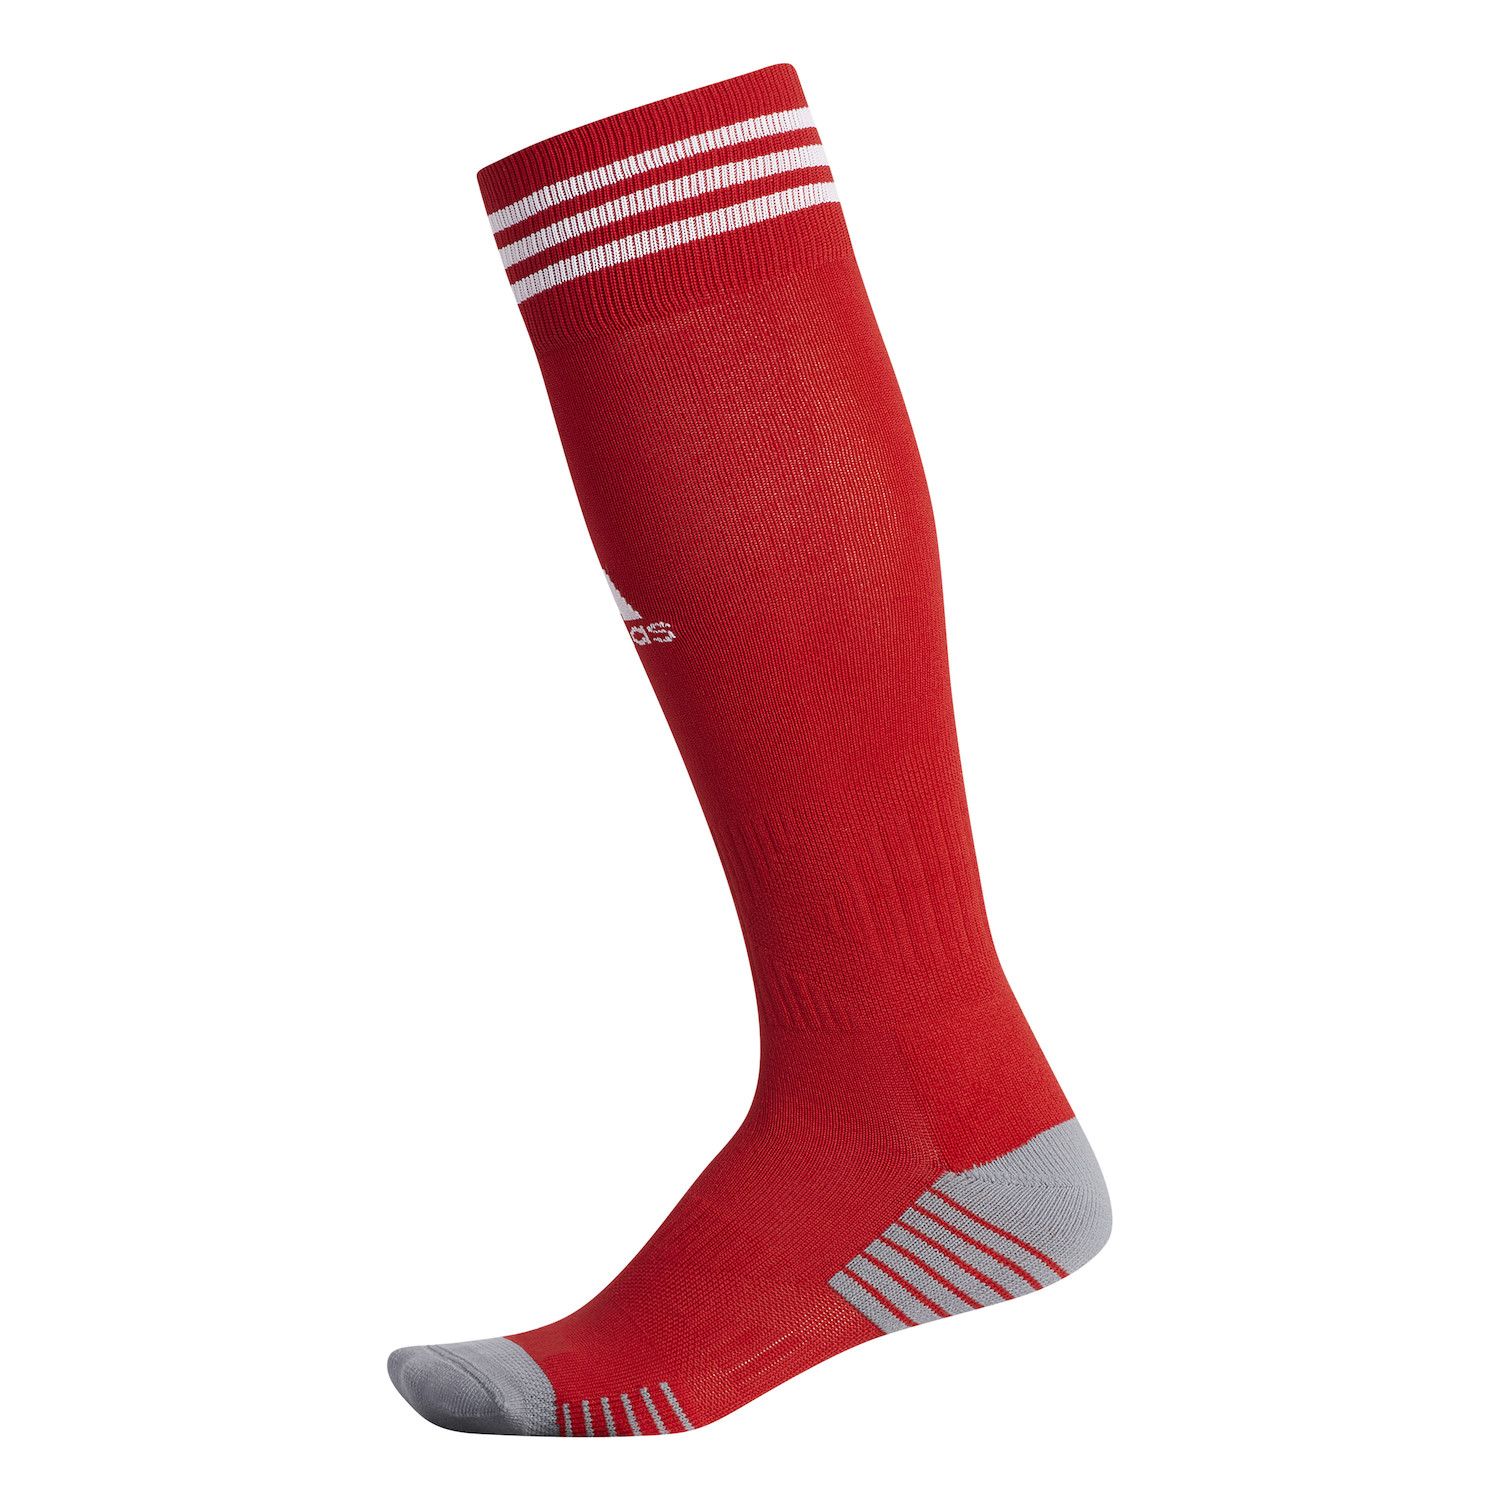 adidas climalite soccer socks